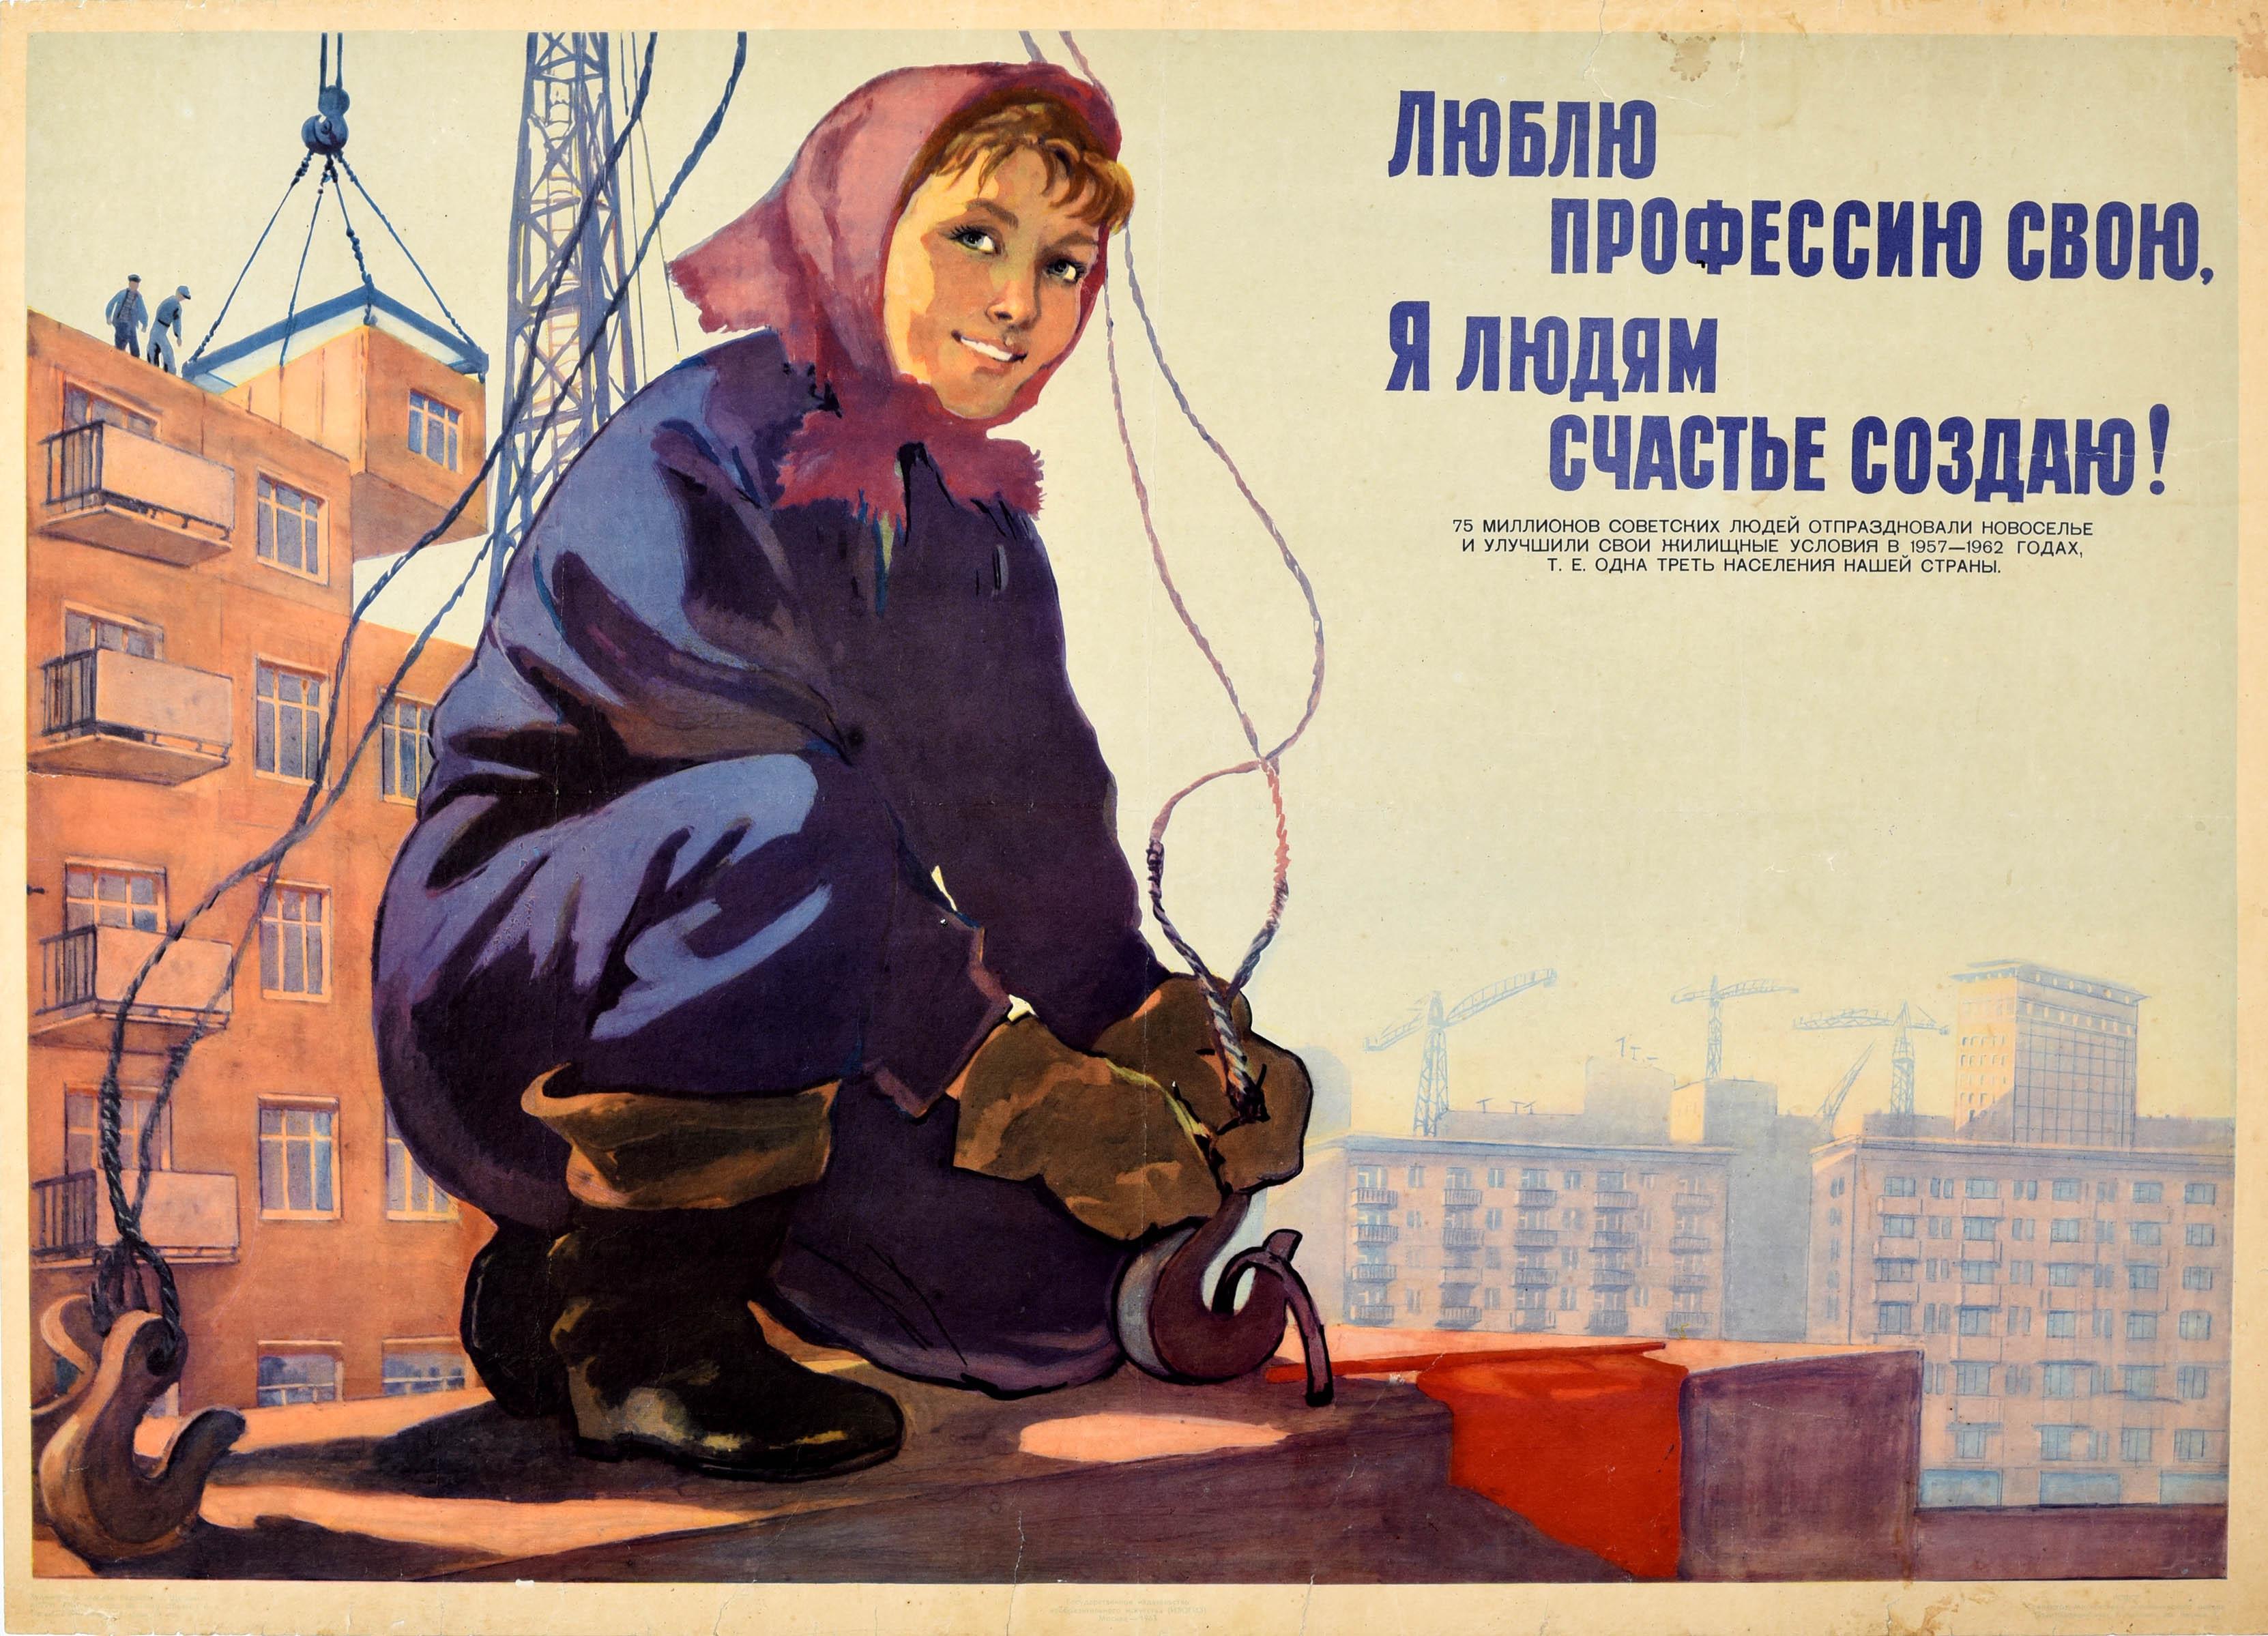 Unknown Print - Original Vintage Soviet Propaganda Poster Construction Builder Happiness USSR